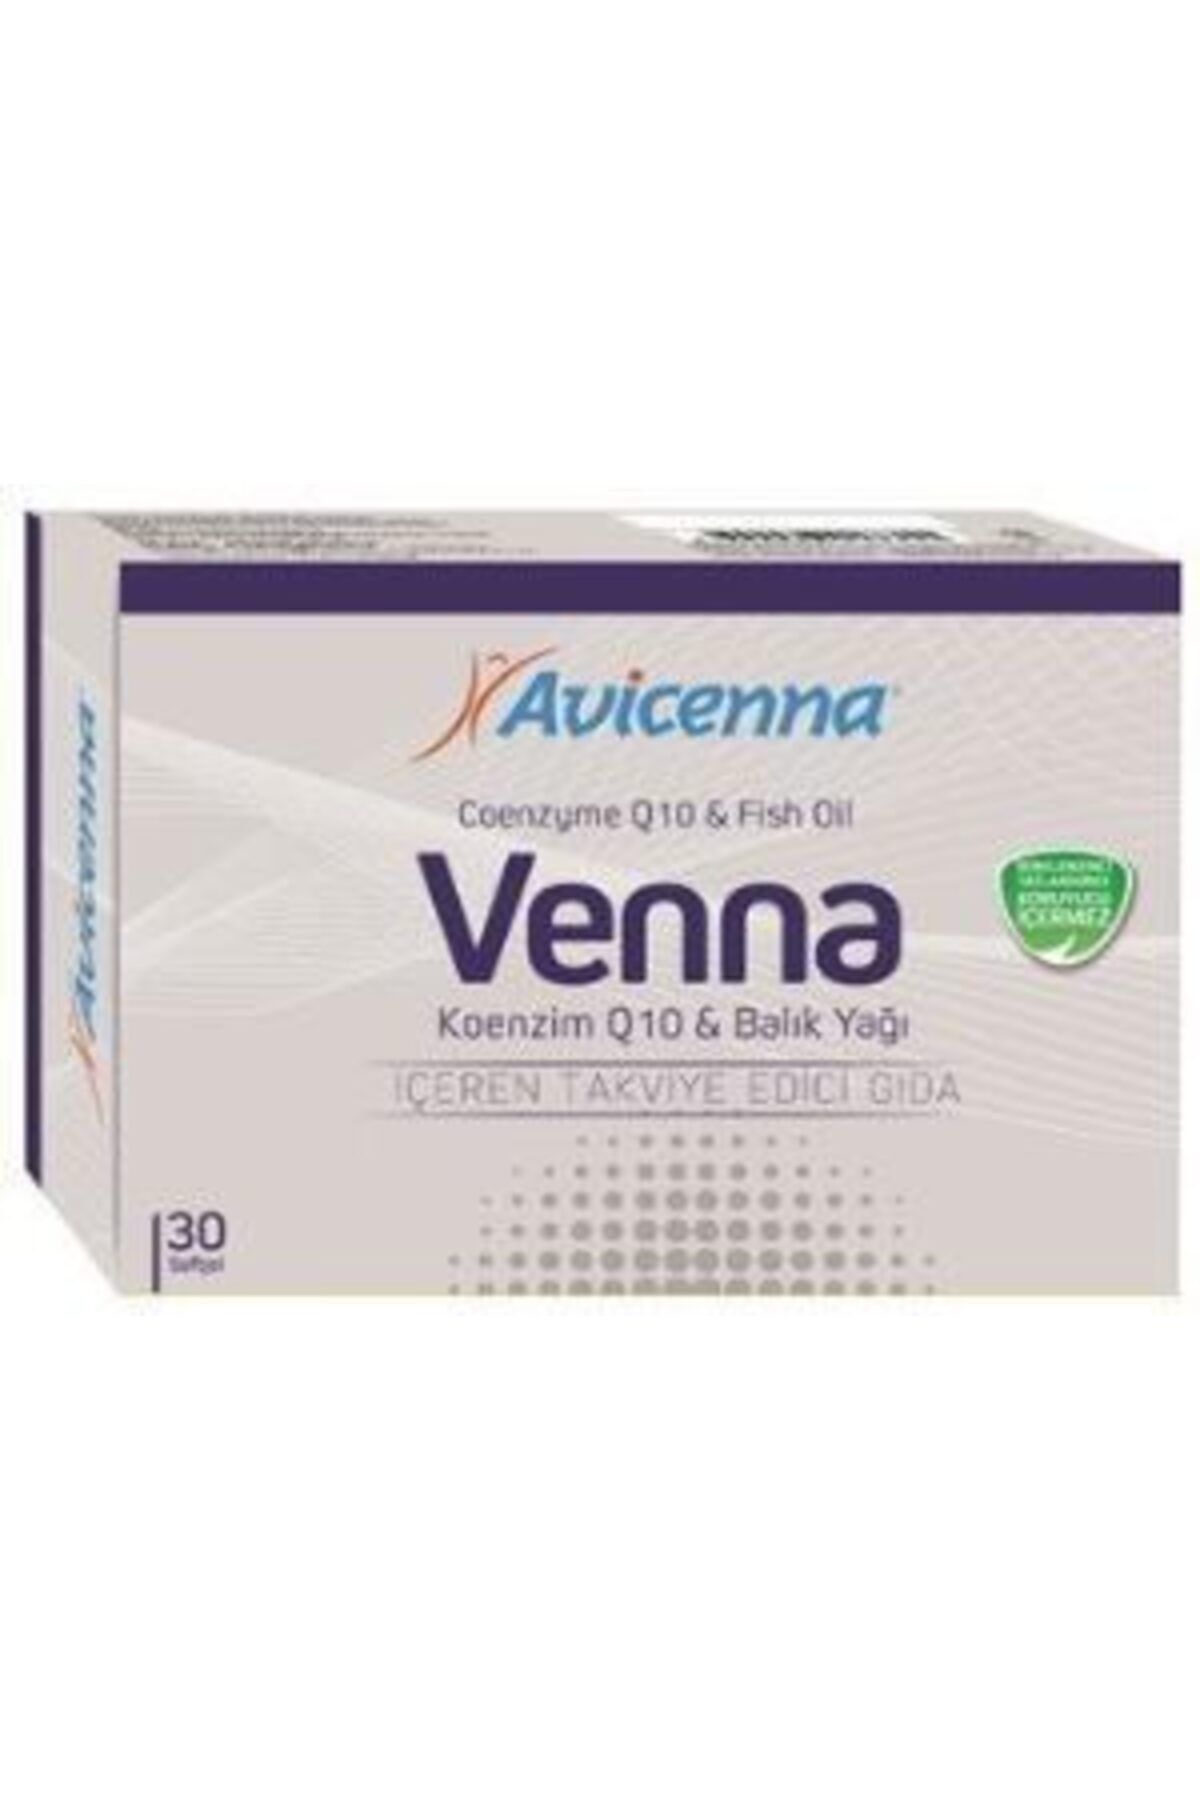 Avicenna Venna Koenzim Q10 & Balık Yağı 30 Softjel